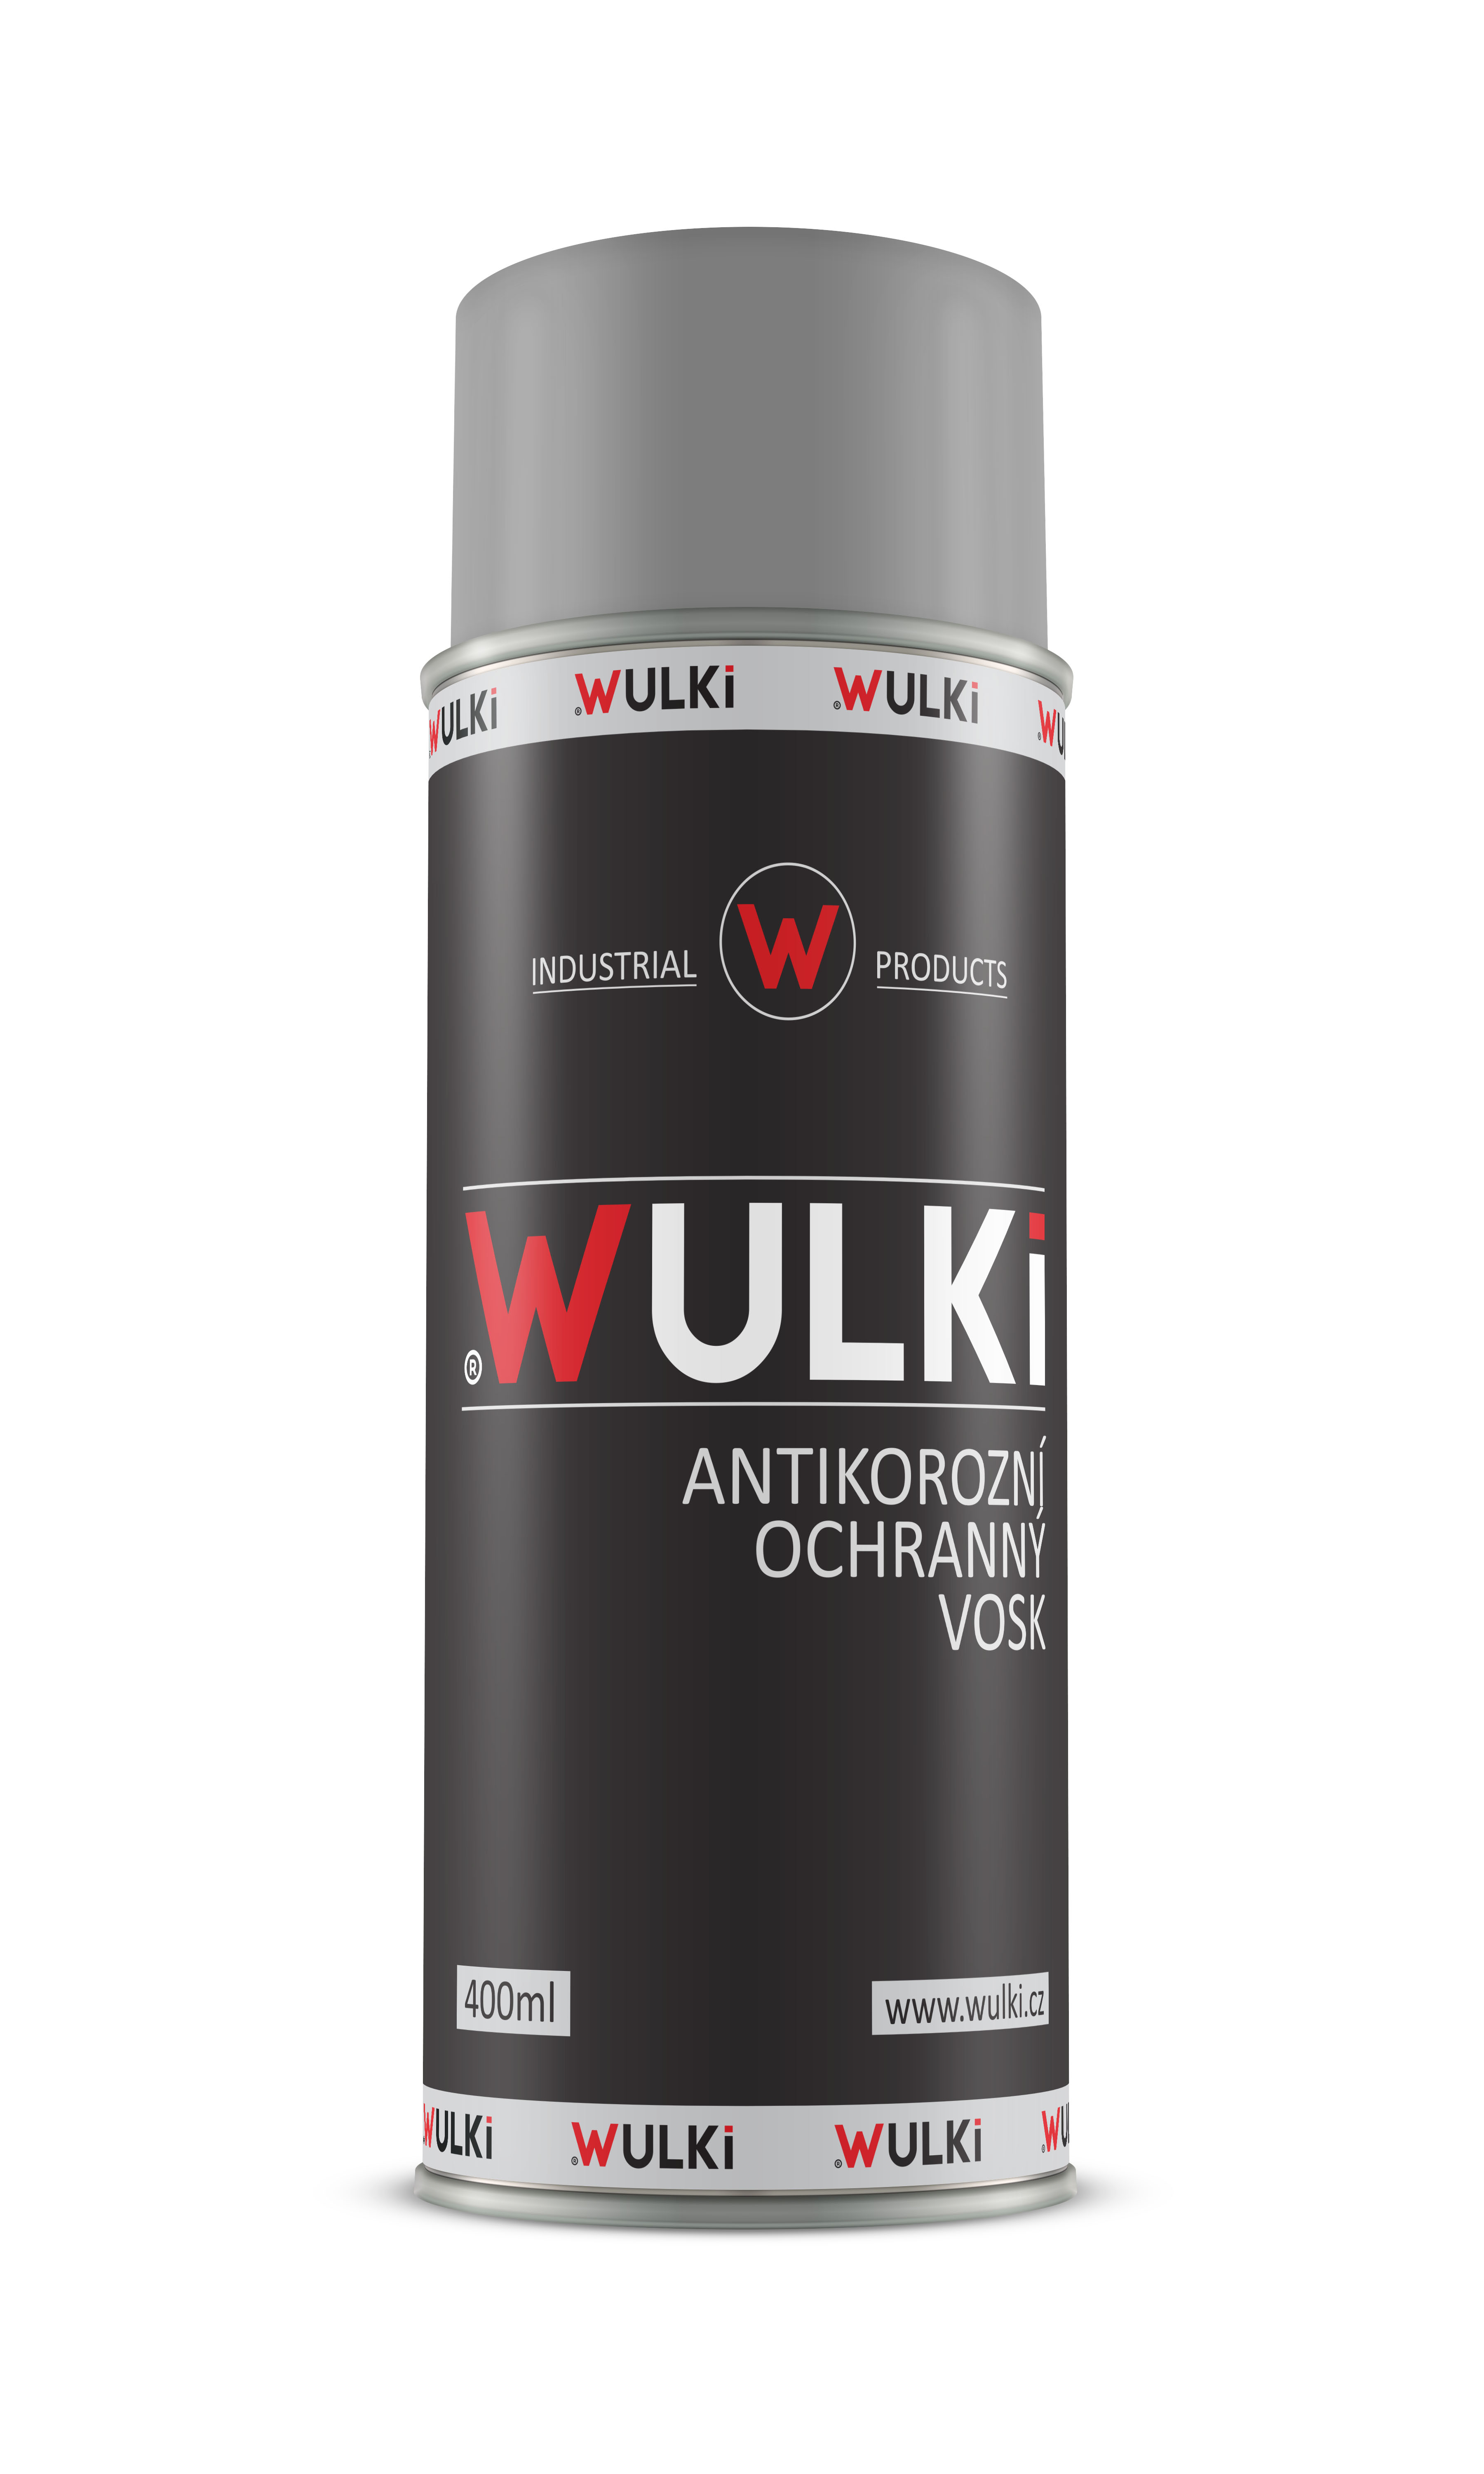 Antikorozní ochranný vosk WULKi - 400ml